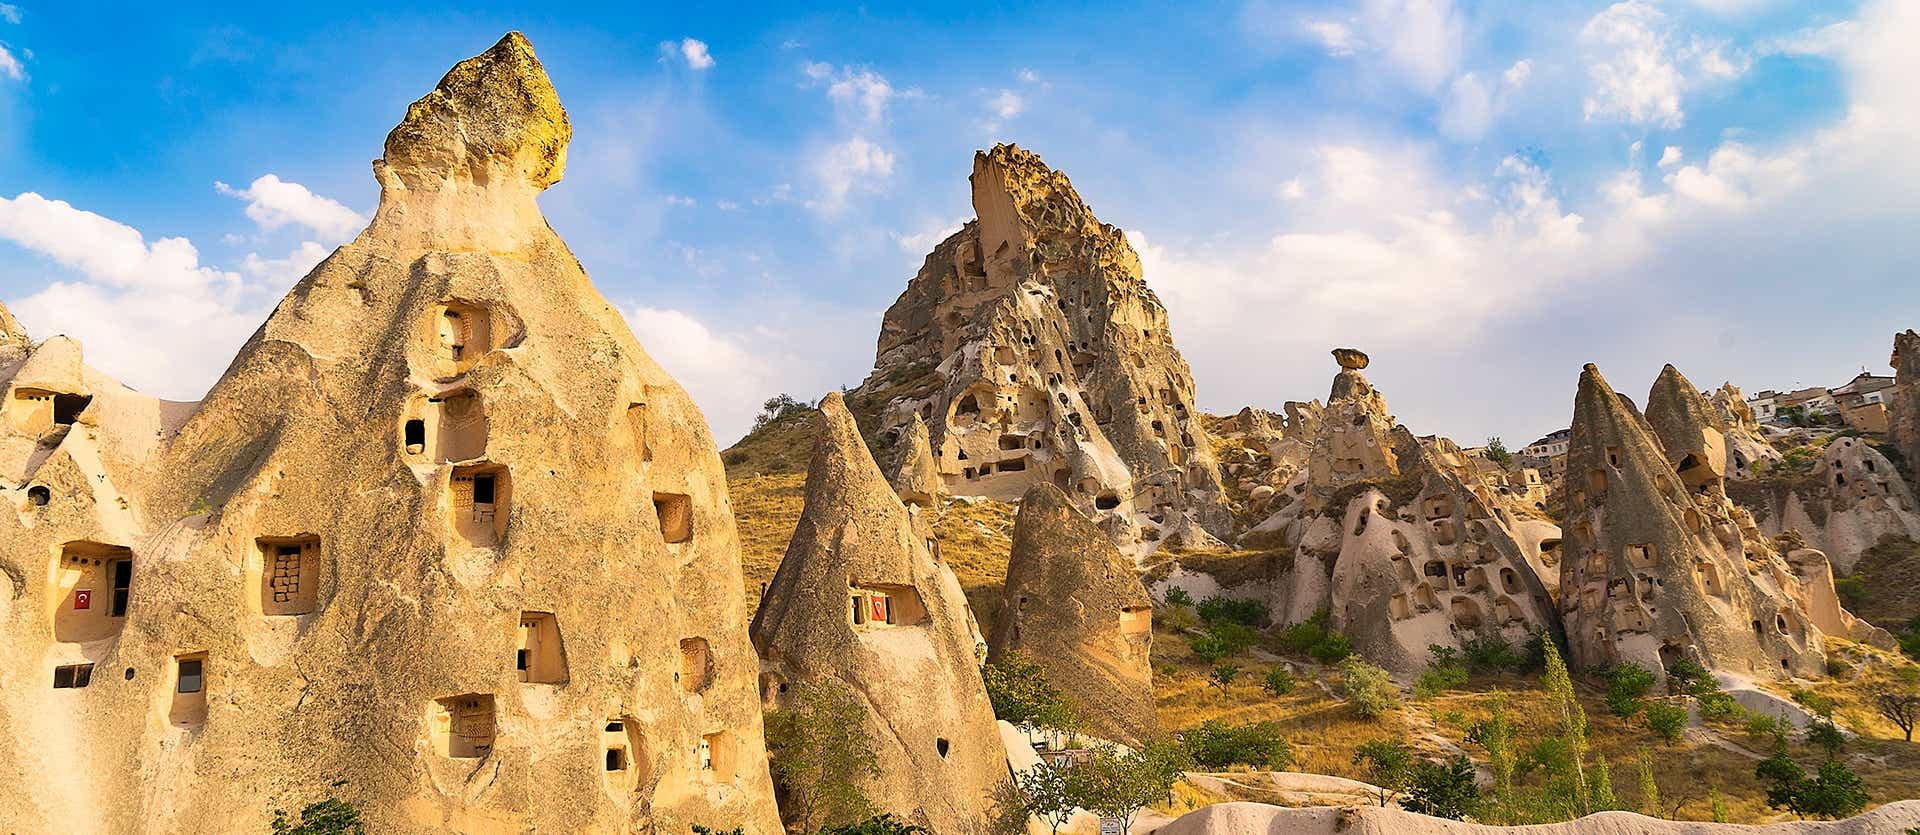 Cave Dwellings <span class="iconos separador"></span> Cappadocia <span class="iconos separador"></span> Turkey